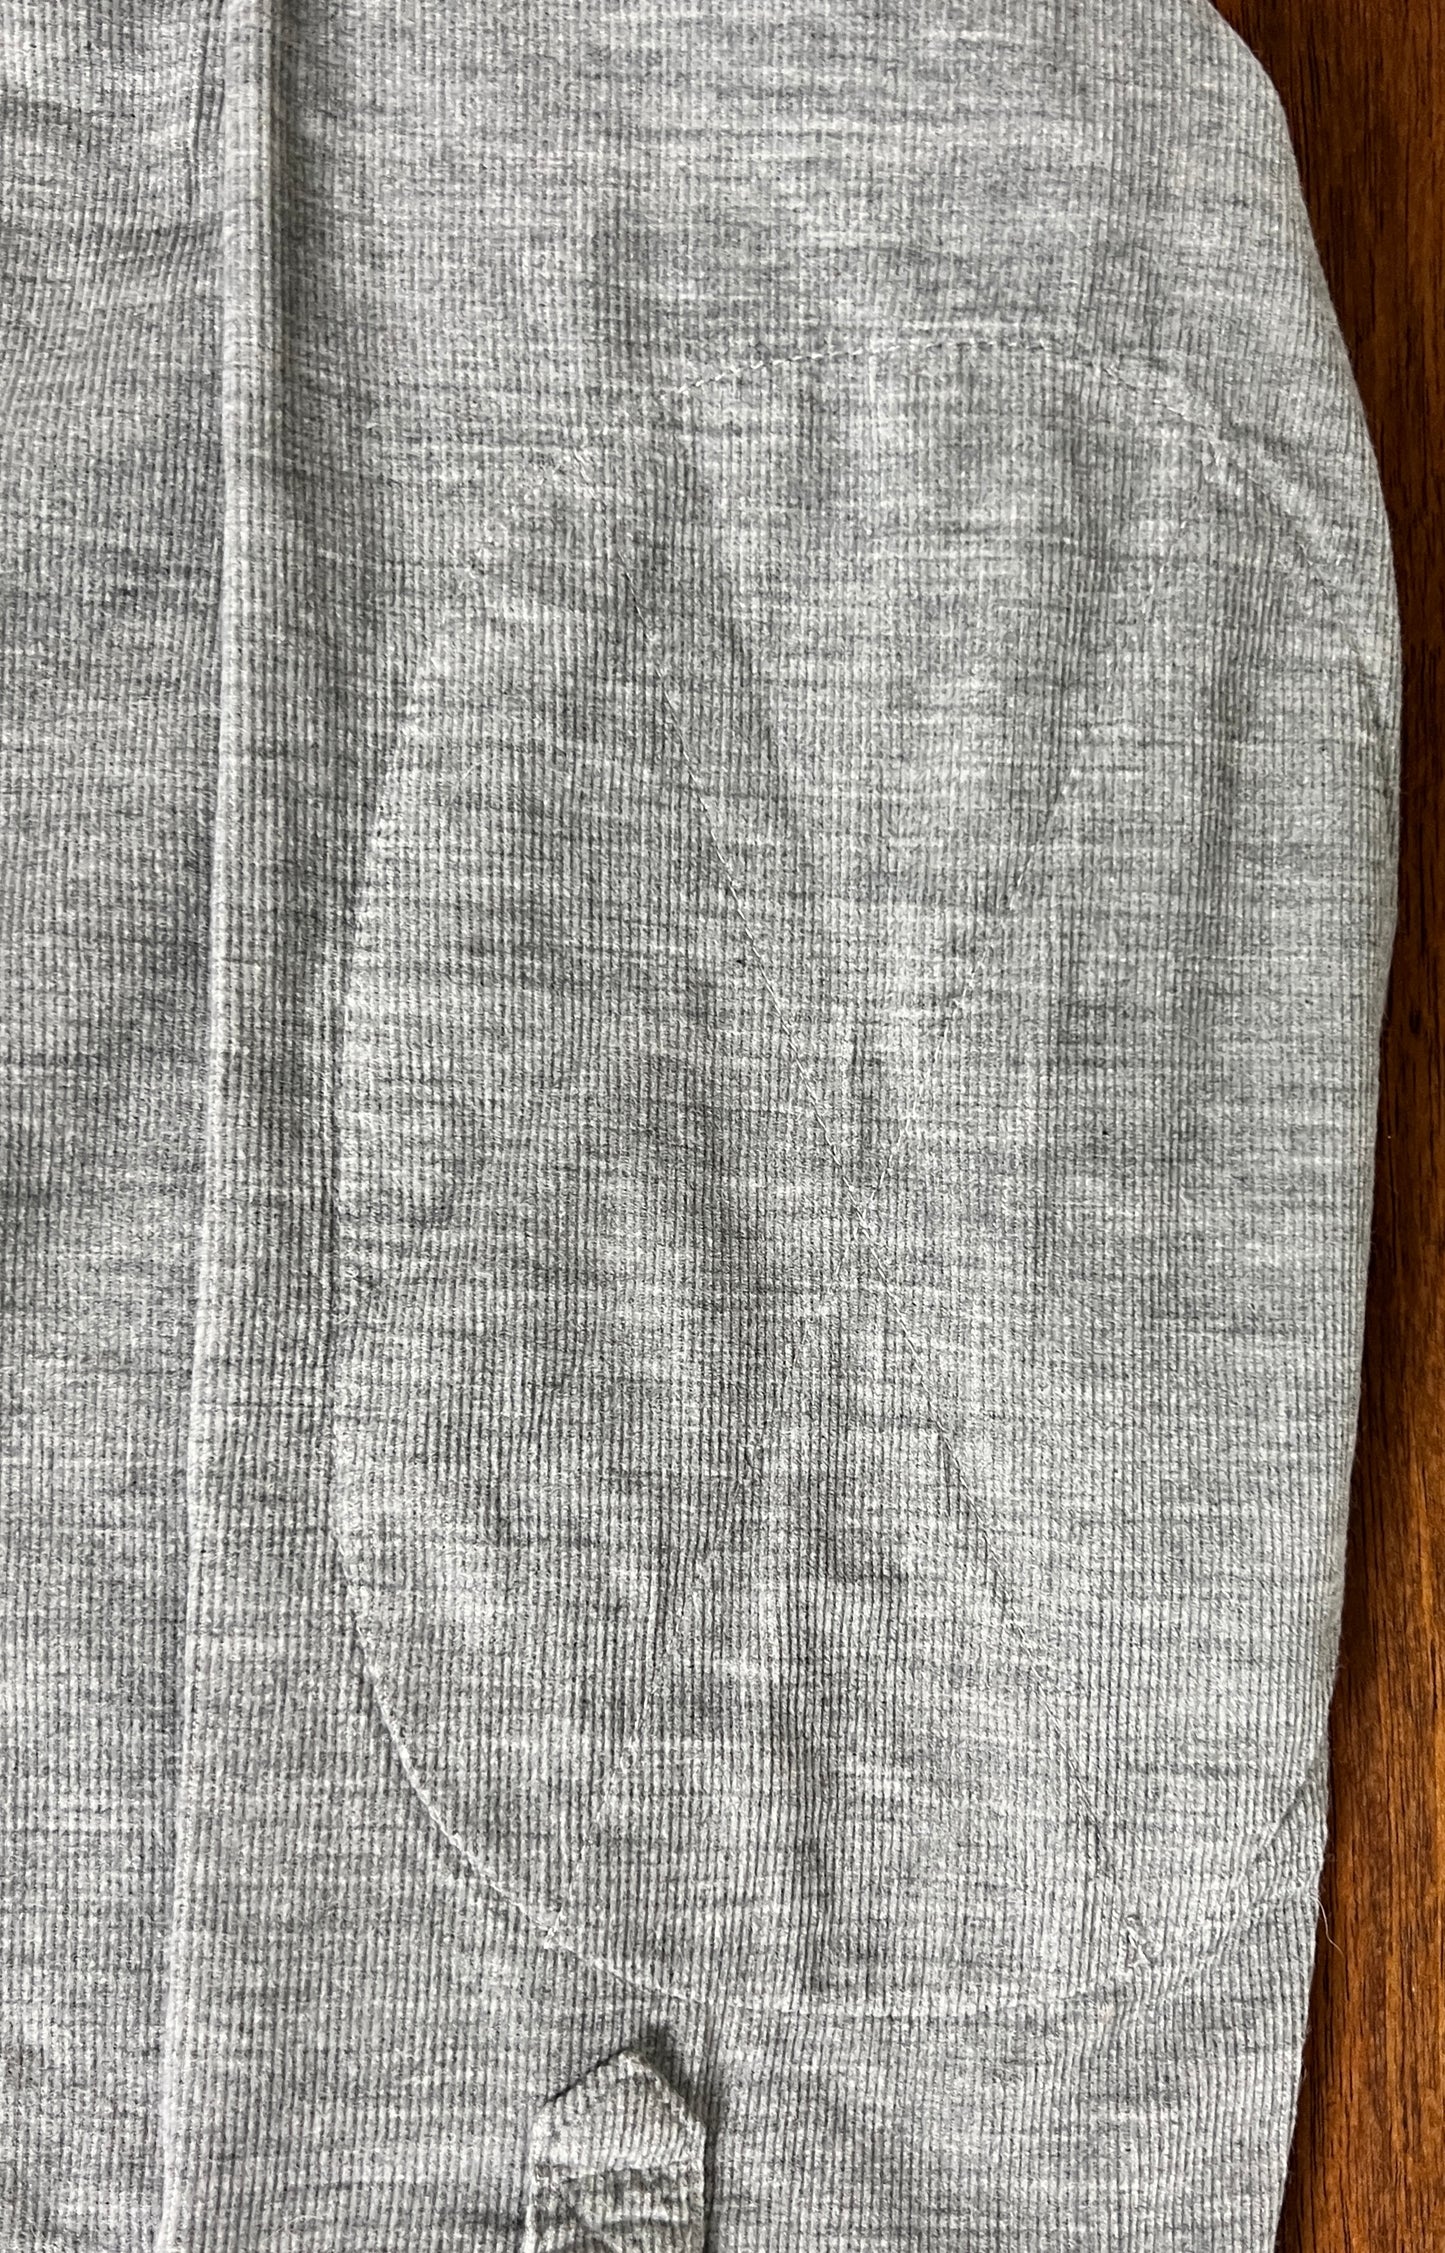 The Grey Corduroy Shirt